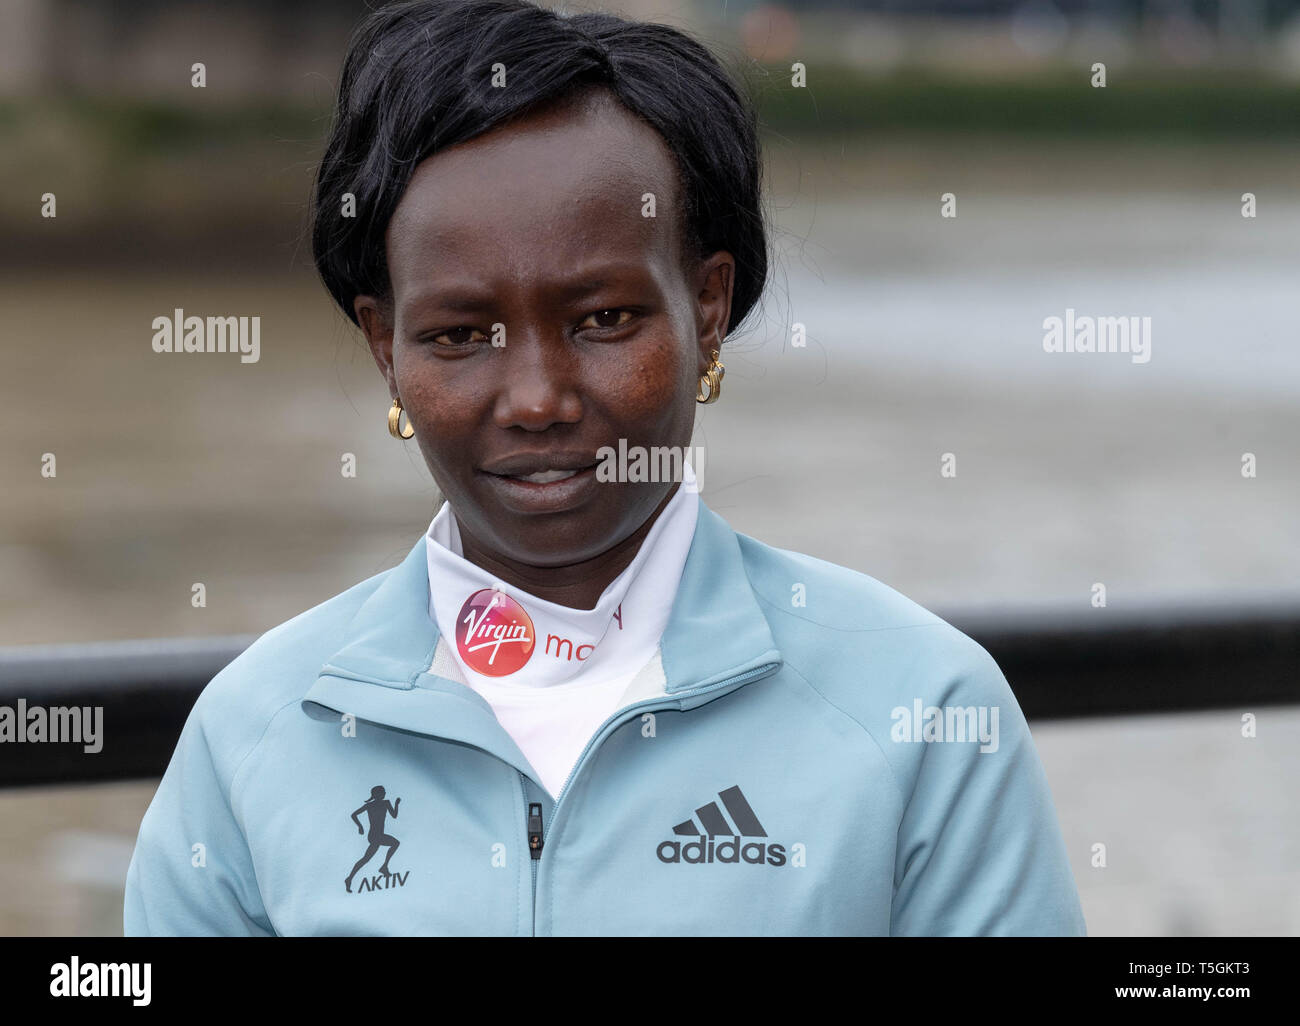 25thApril Londres 2019, Virgin Money Maratón de Londres la mujer Photocall corredores de élite, Mary Keitany, Crédito: Ian Davidson/Alamy Live News Foto de stock